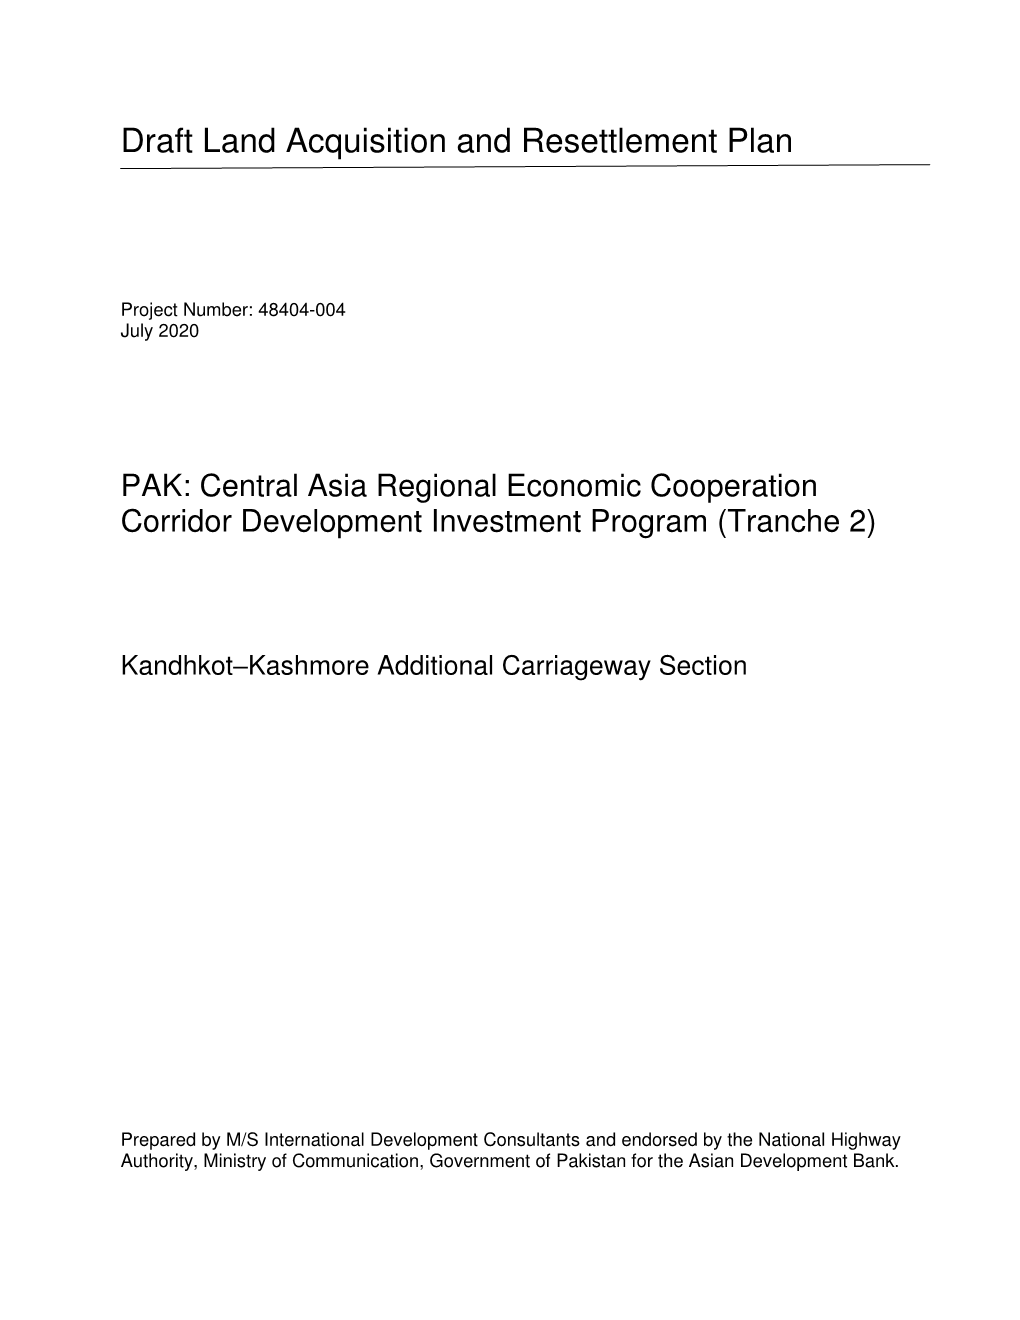 48404-004: Central Asia Regional Economic Cooperation Corridor Development Investment Program-Tranche 2